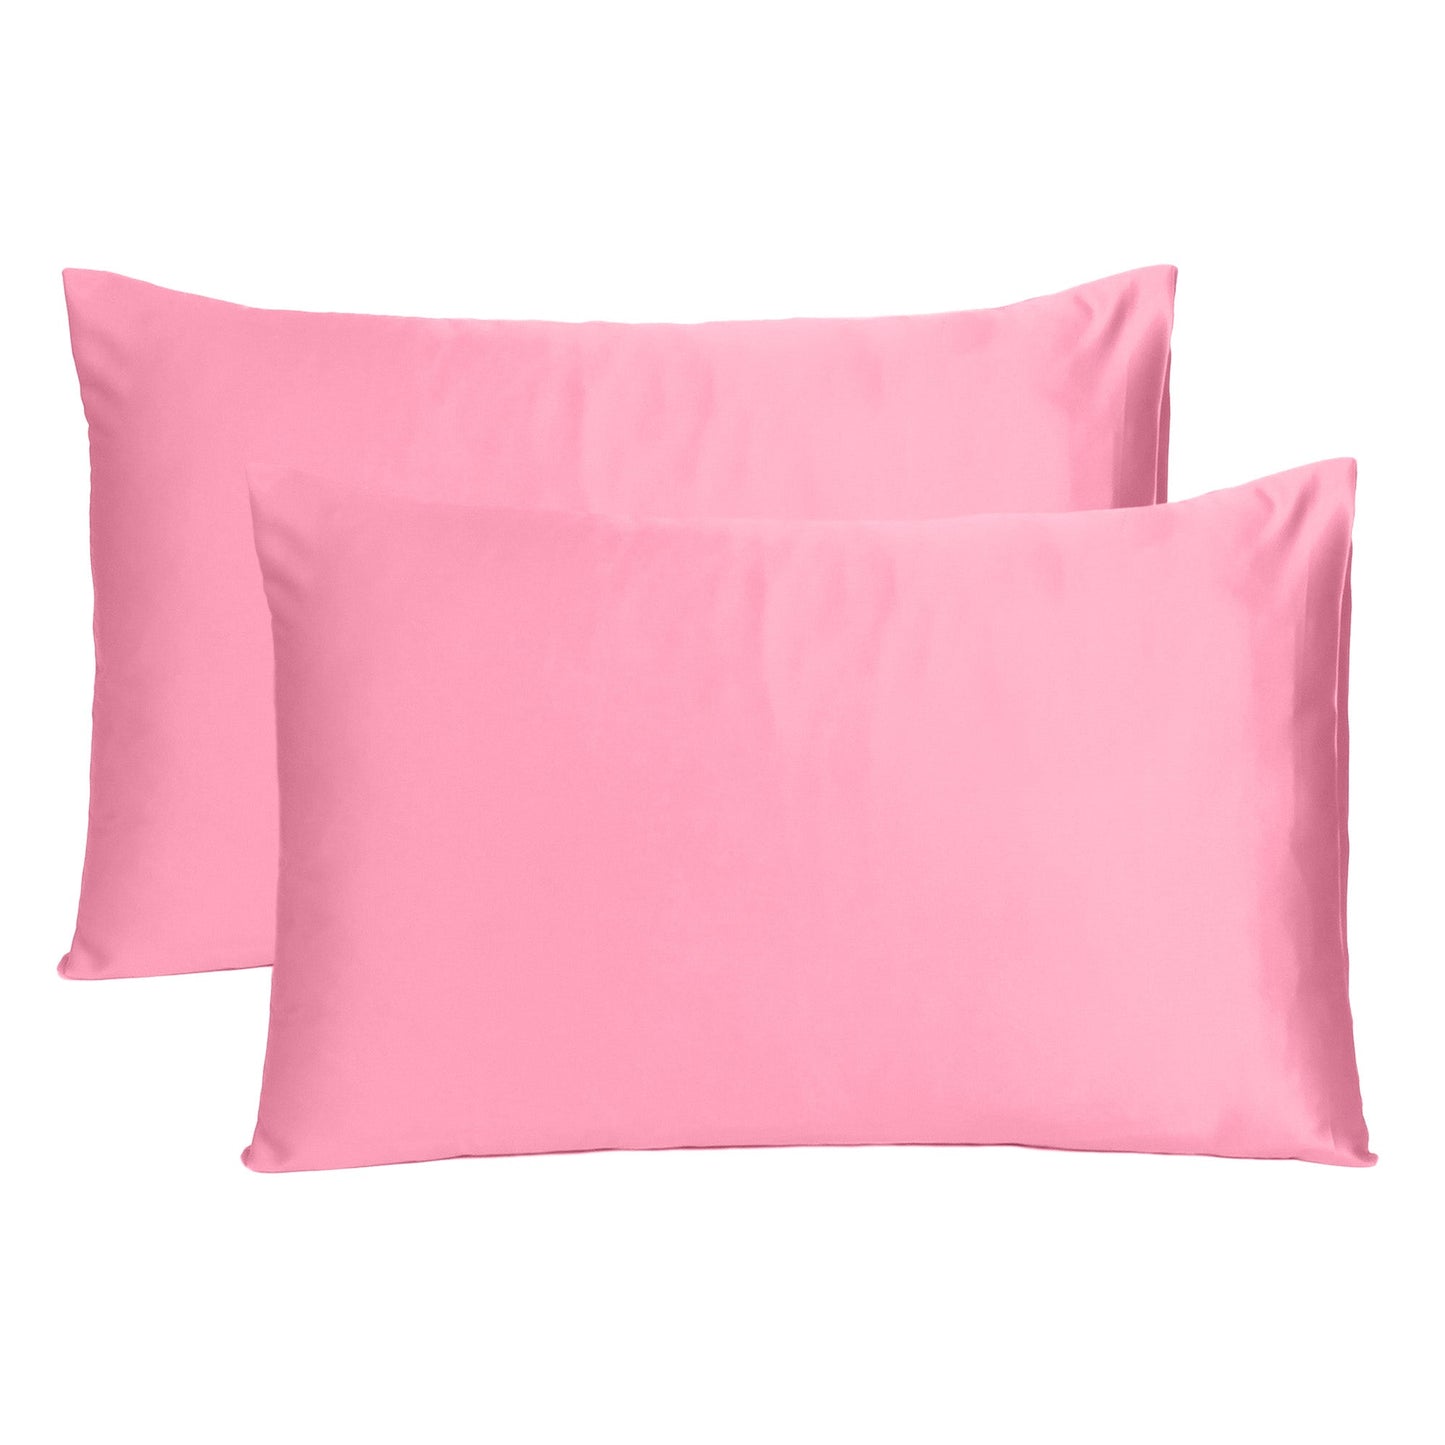 Luxury Soft Plain Satin Silk Pillowcases in Set of 2 - Pink Lemonade